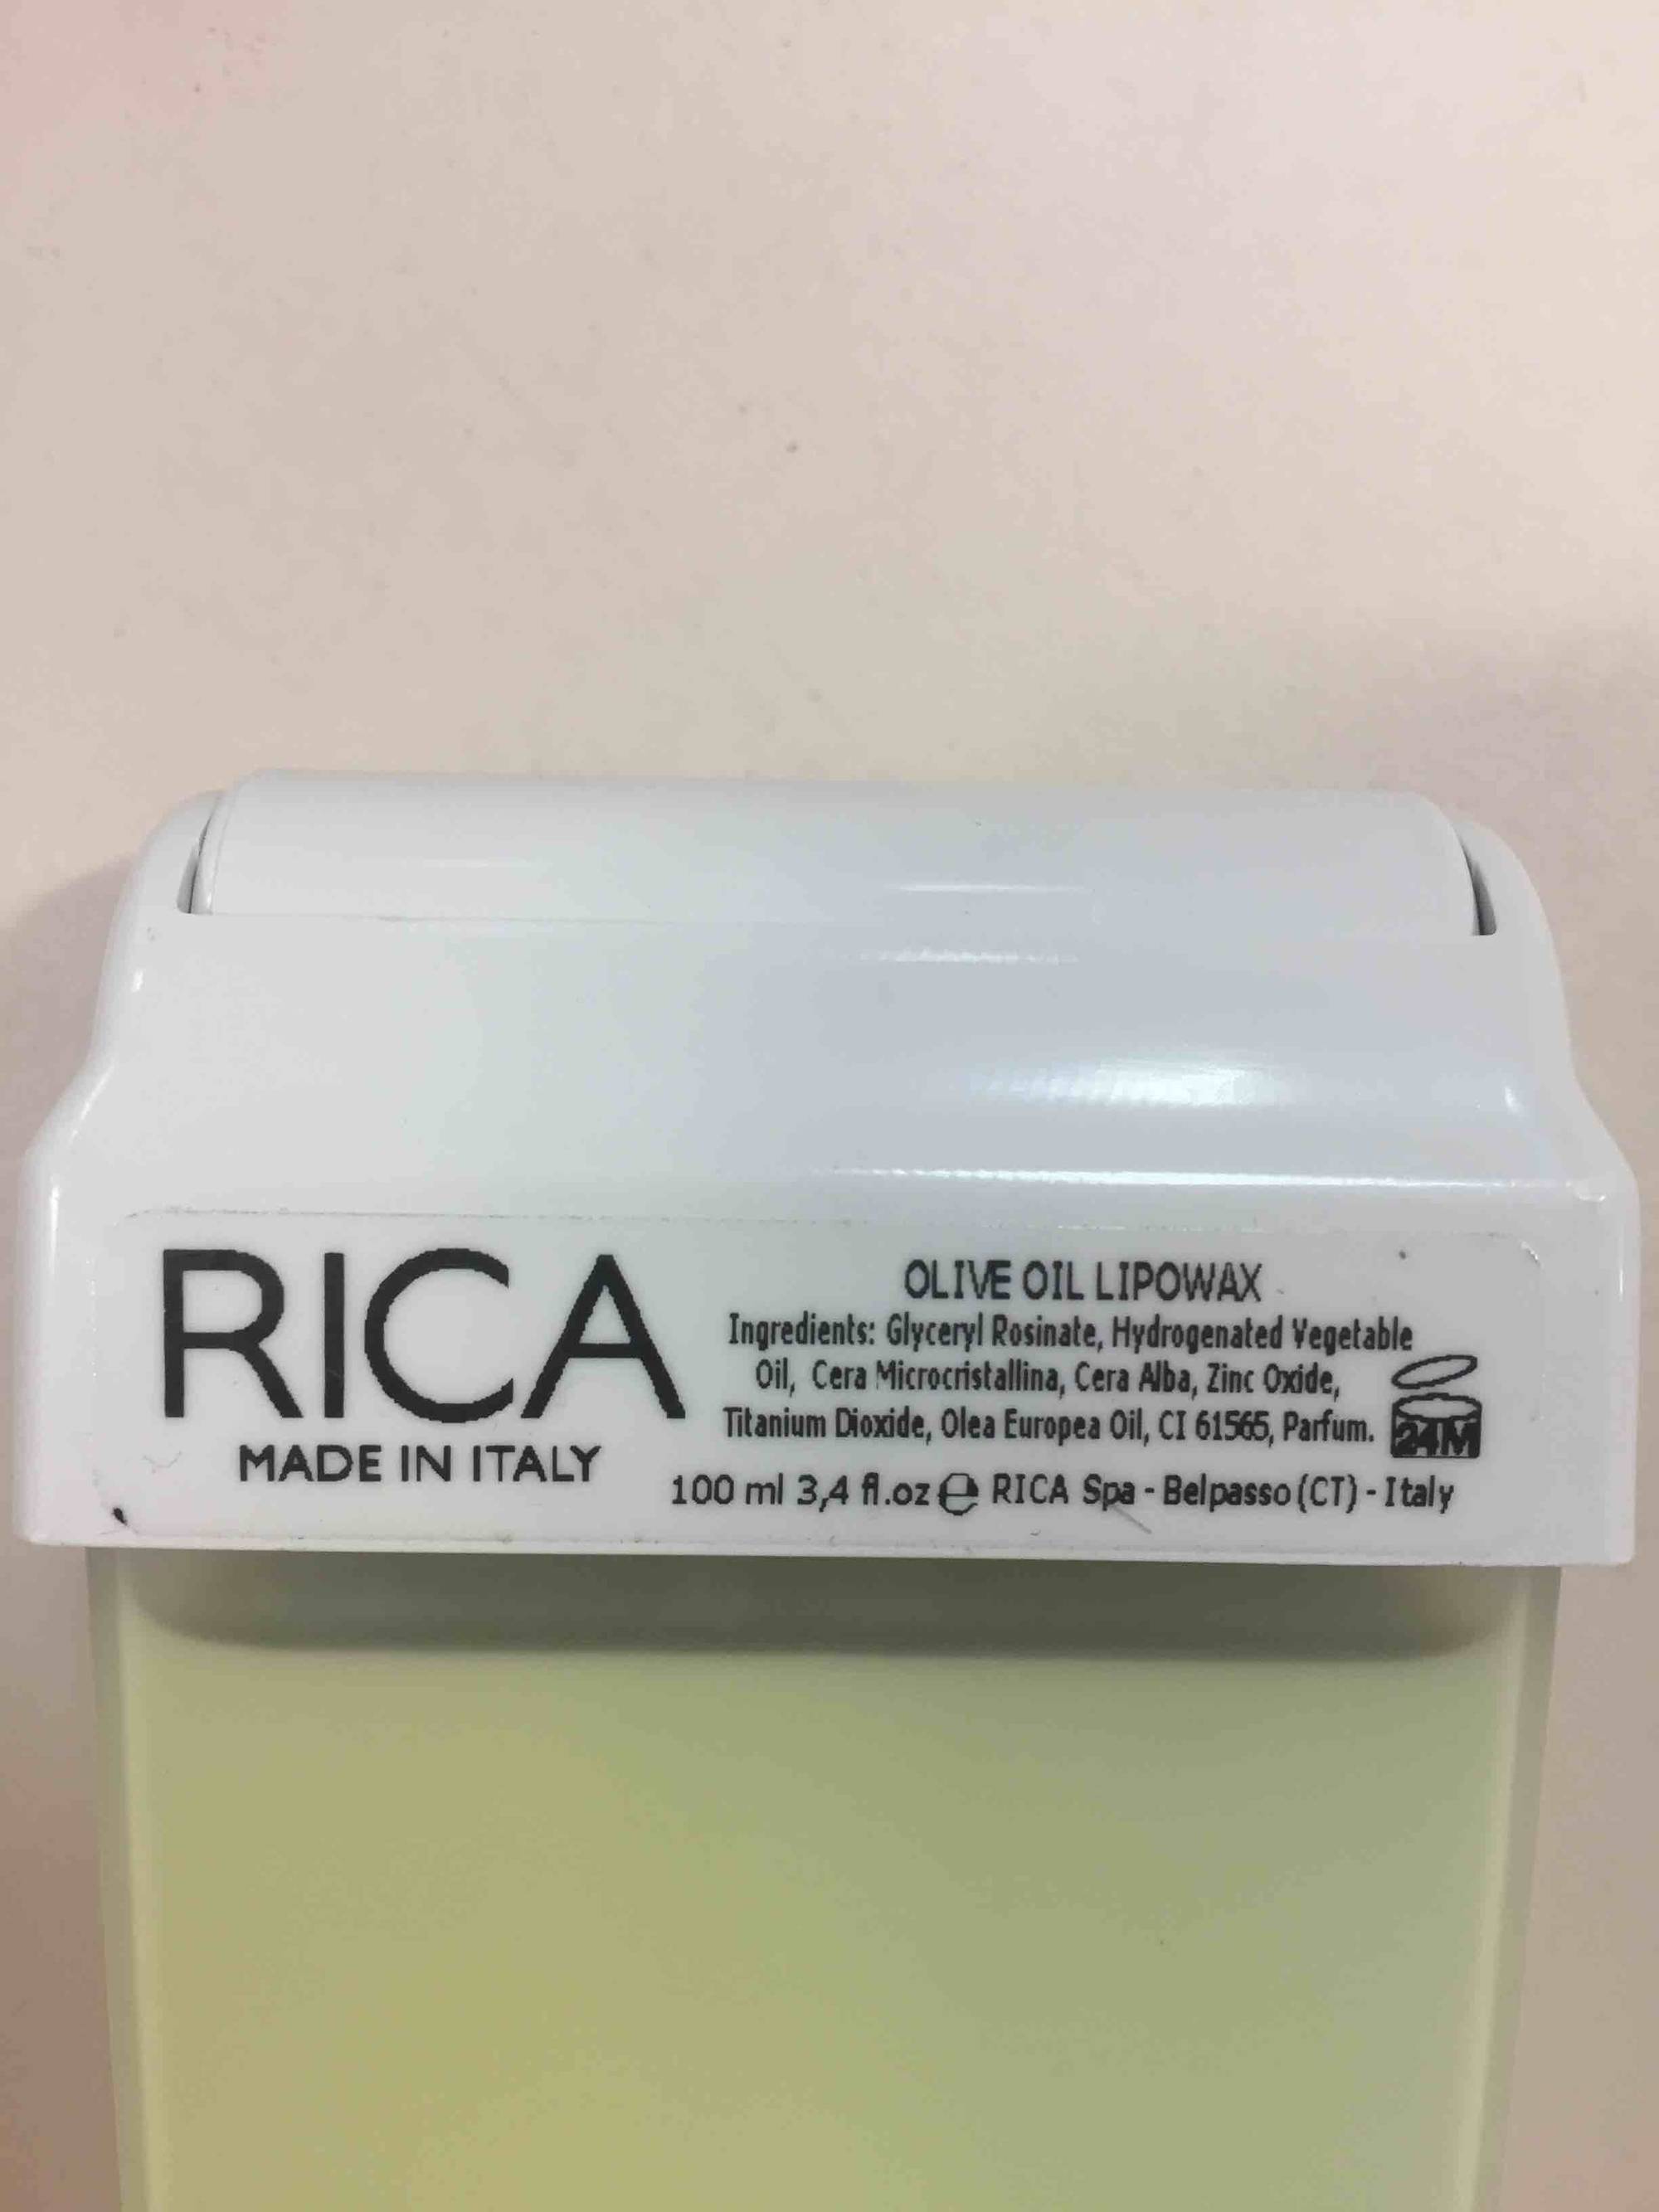 RICA - Olive oil lipowax